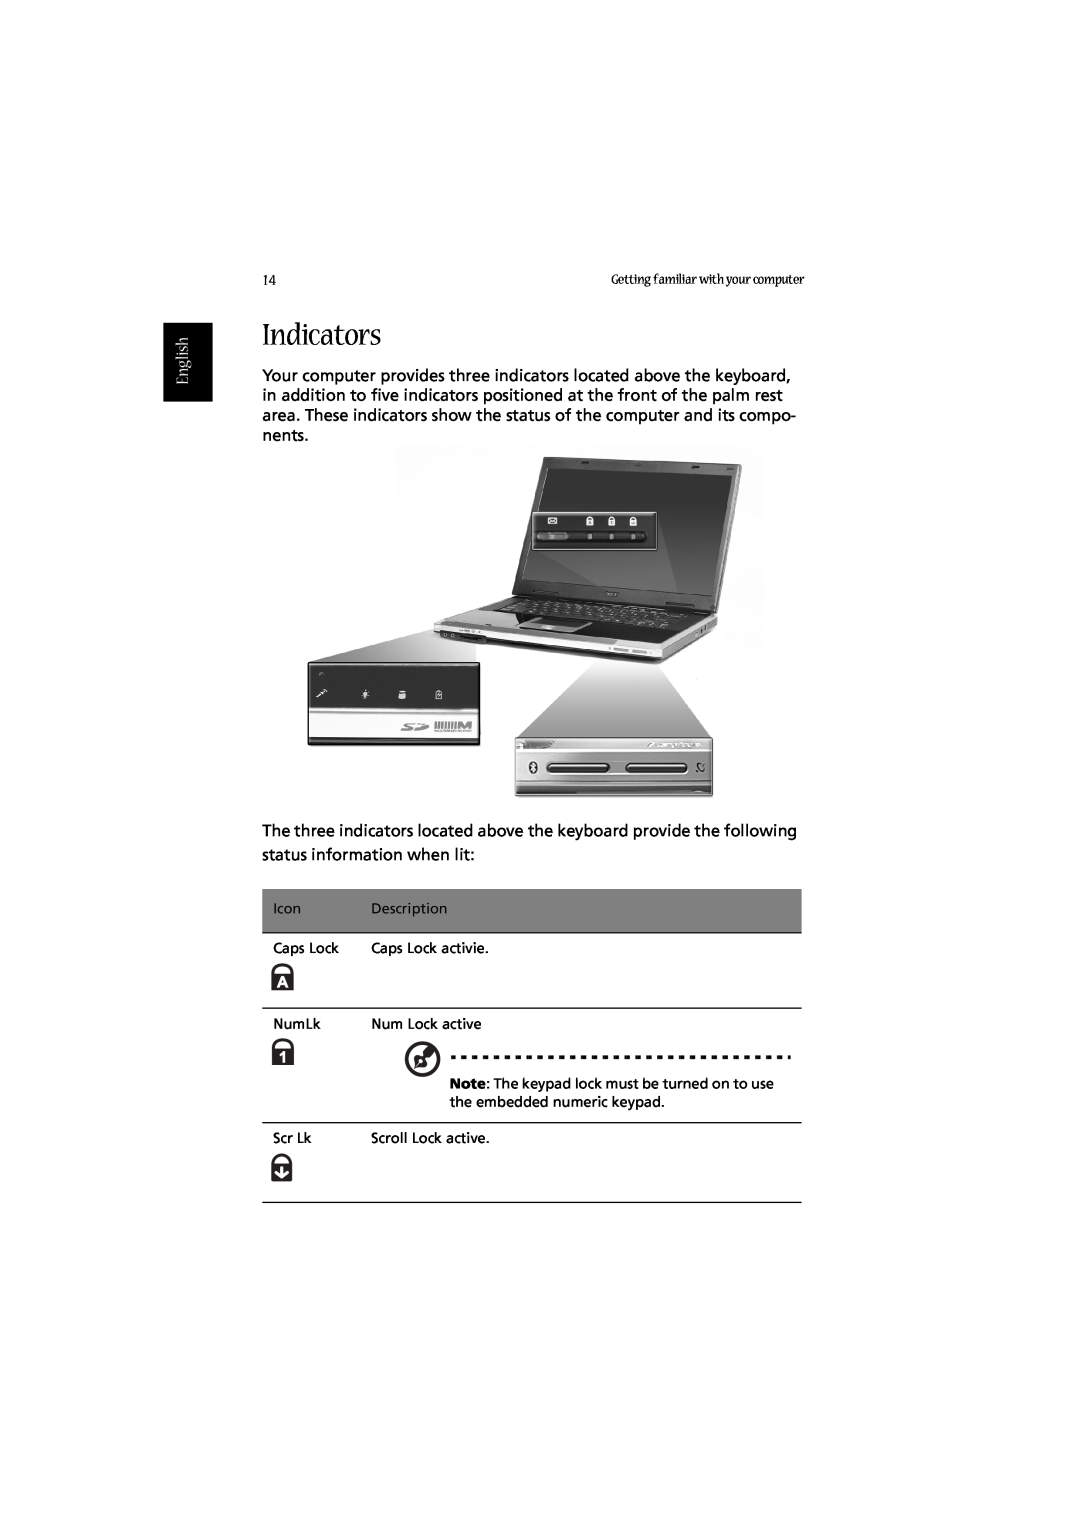 Acer 2010 Indicators, English, Icon Description, Caps Lock activie, NumLk, Num Lock active, Scr Lk, Scroll Lock active 